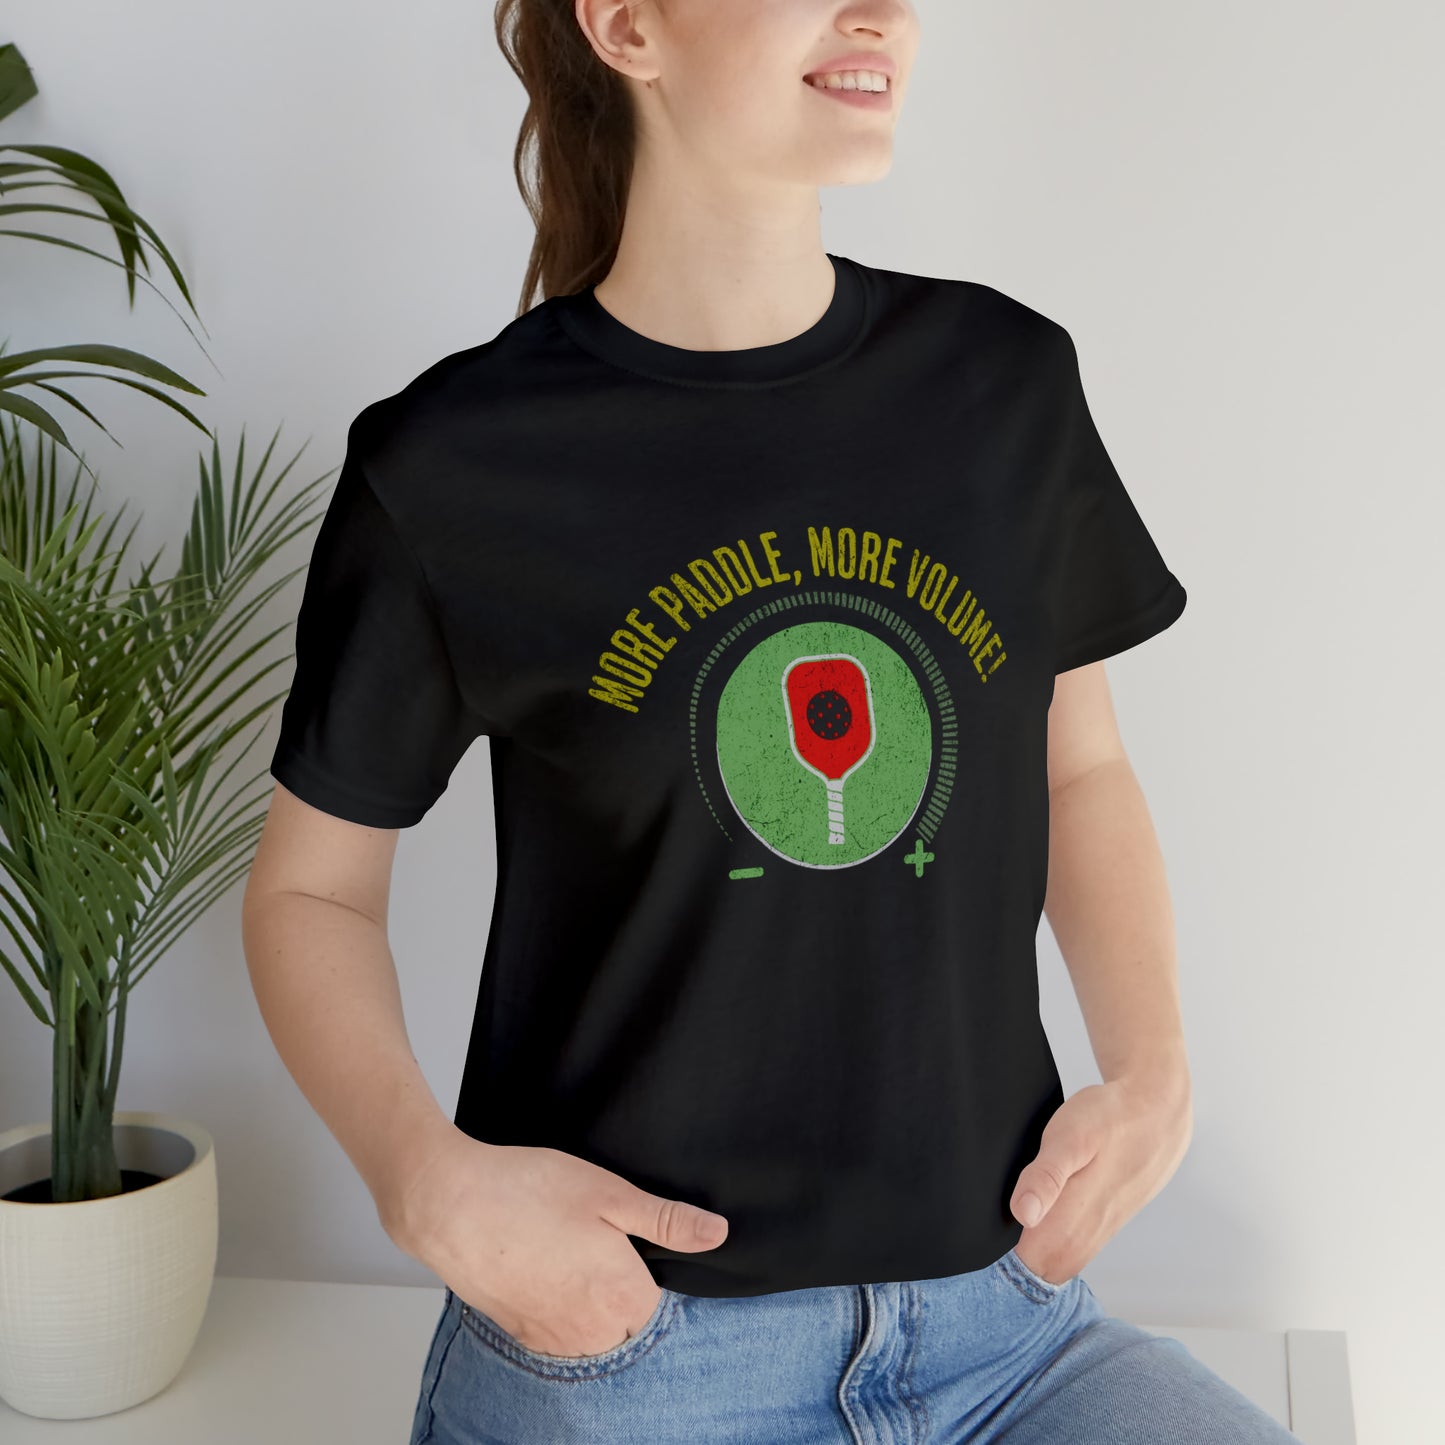 More Paddle, More Volume: Pickleball T-Shirt